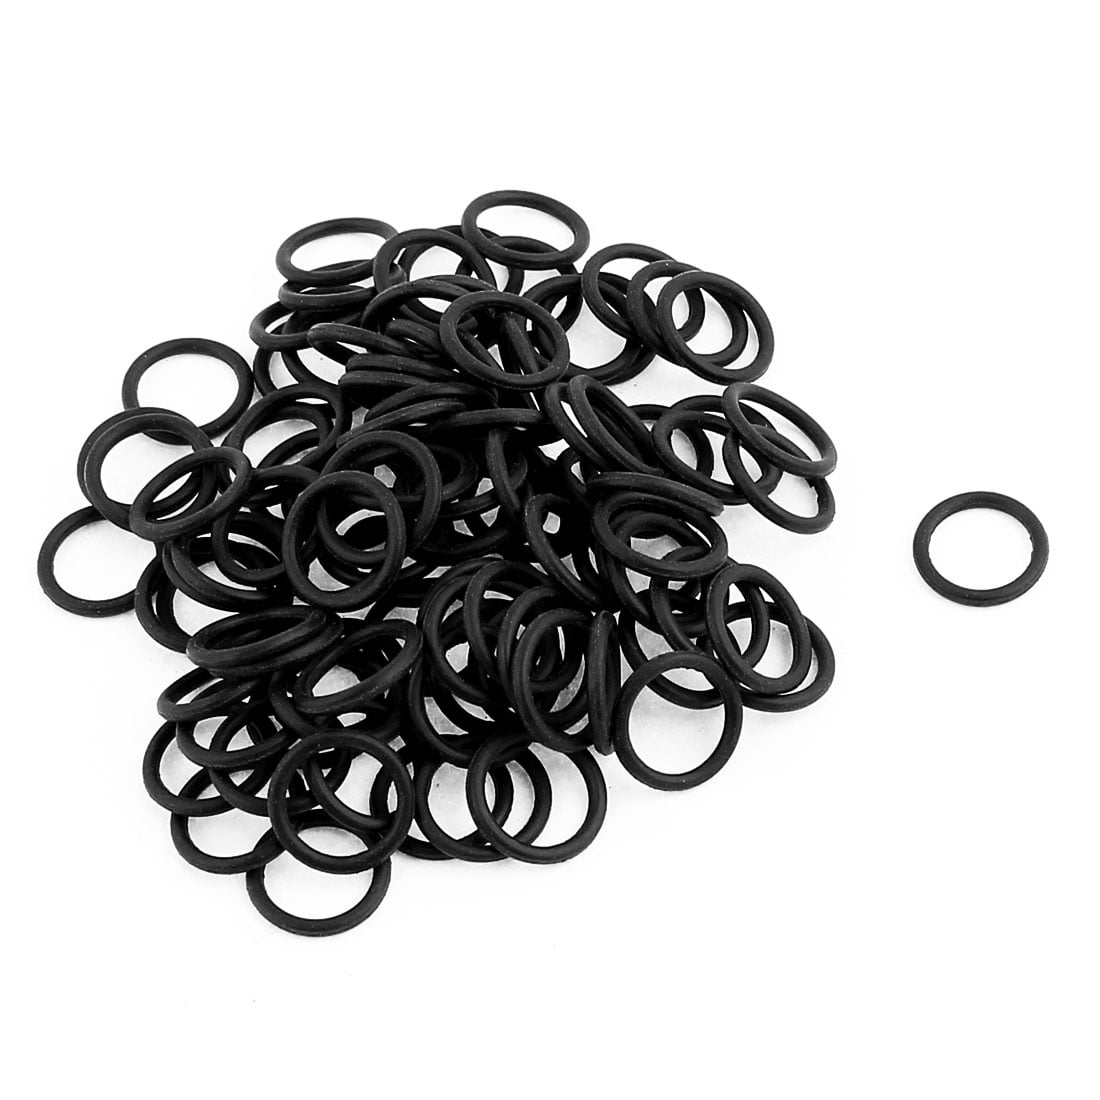 100Pcs Black O-Ring 10mm x 1.2mm BUNA-N Material Oil Seal Washers ...